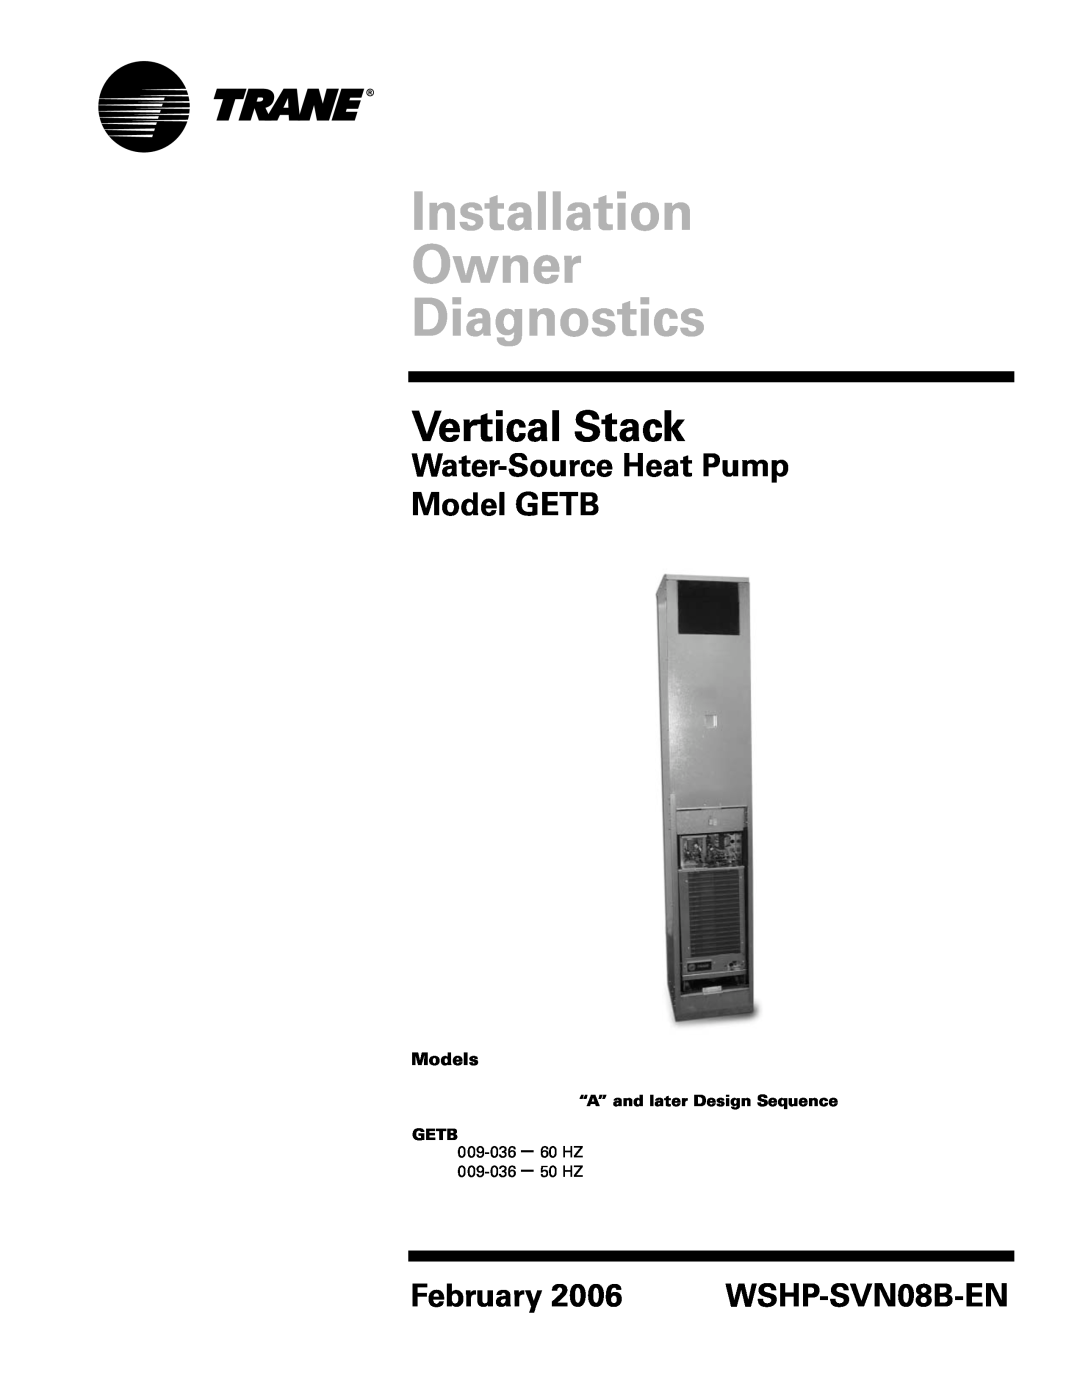 Trane manual Installation Owner Diagnostics, Vertical Stack, Water-SourceHeat Pump Model GETB, February, WSHP-SVN08B-EN 